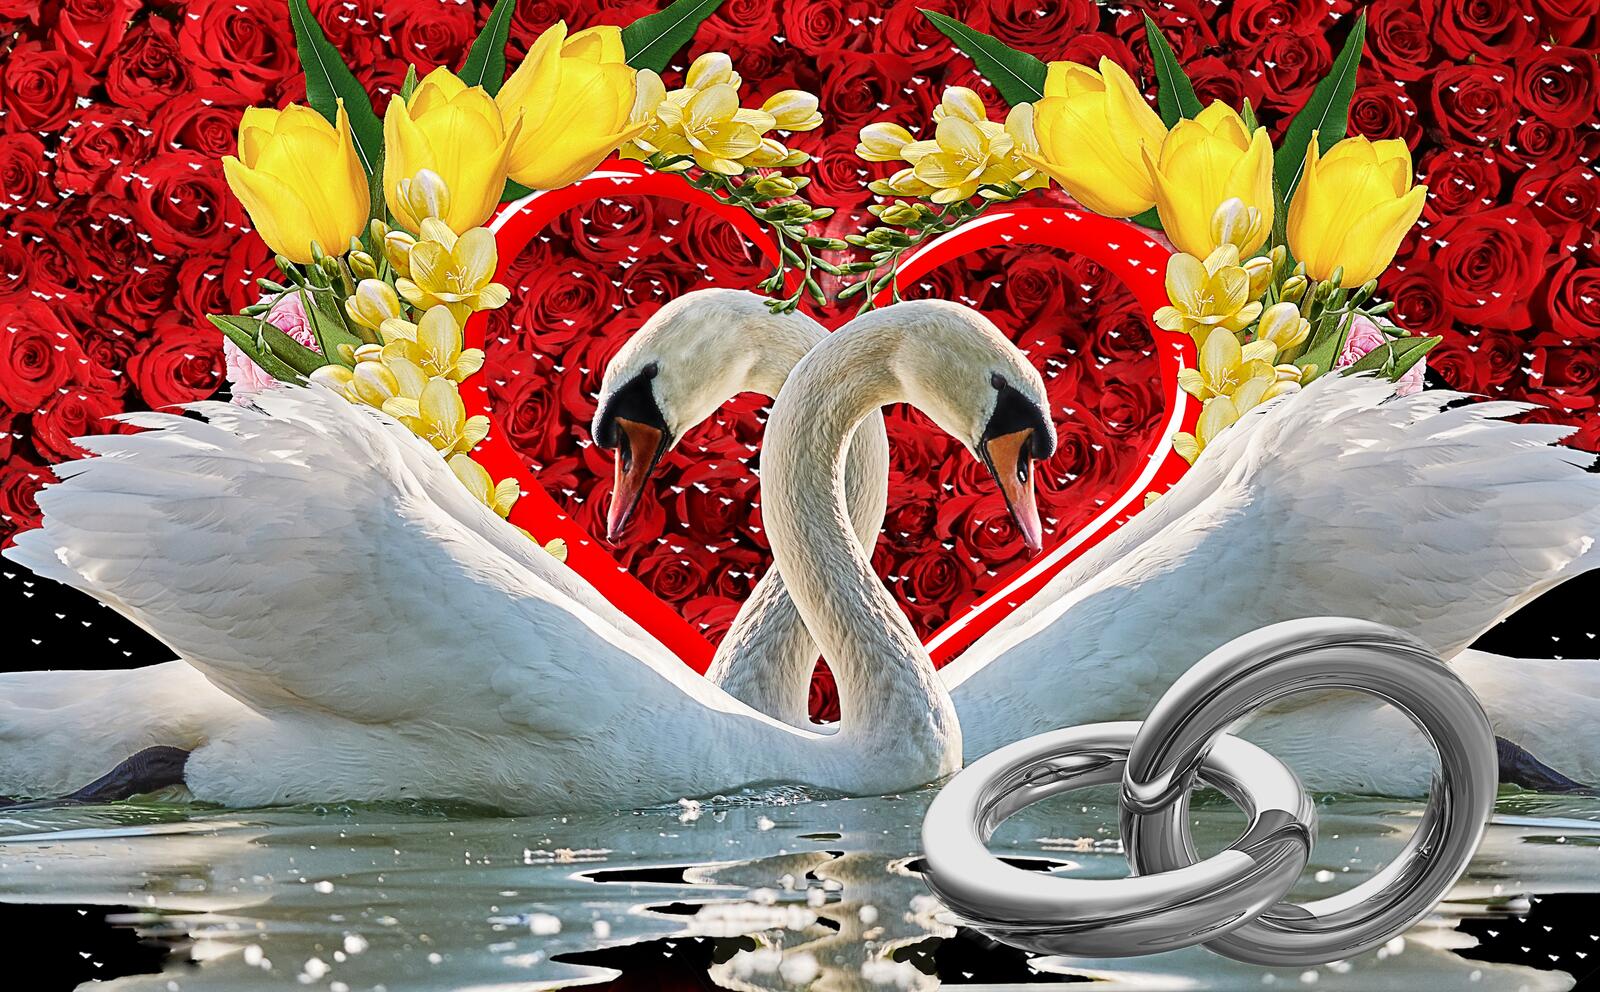 Wallpapers roses flowers swans on the desktop